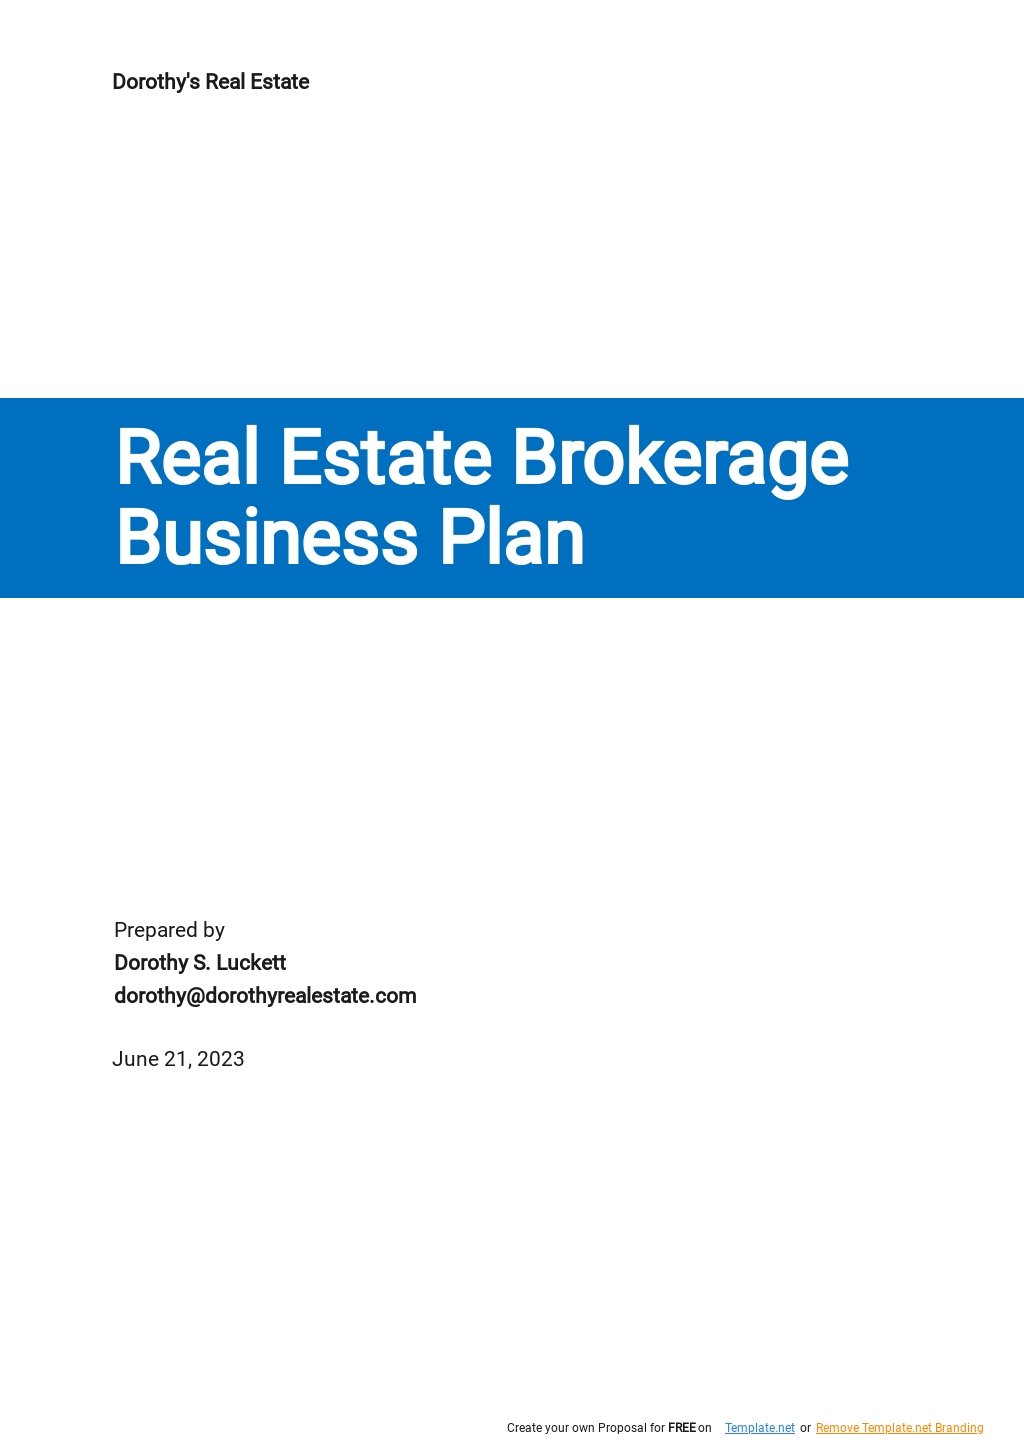 Real Estate Brokerage Business Plan Template.jpe